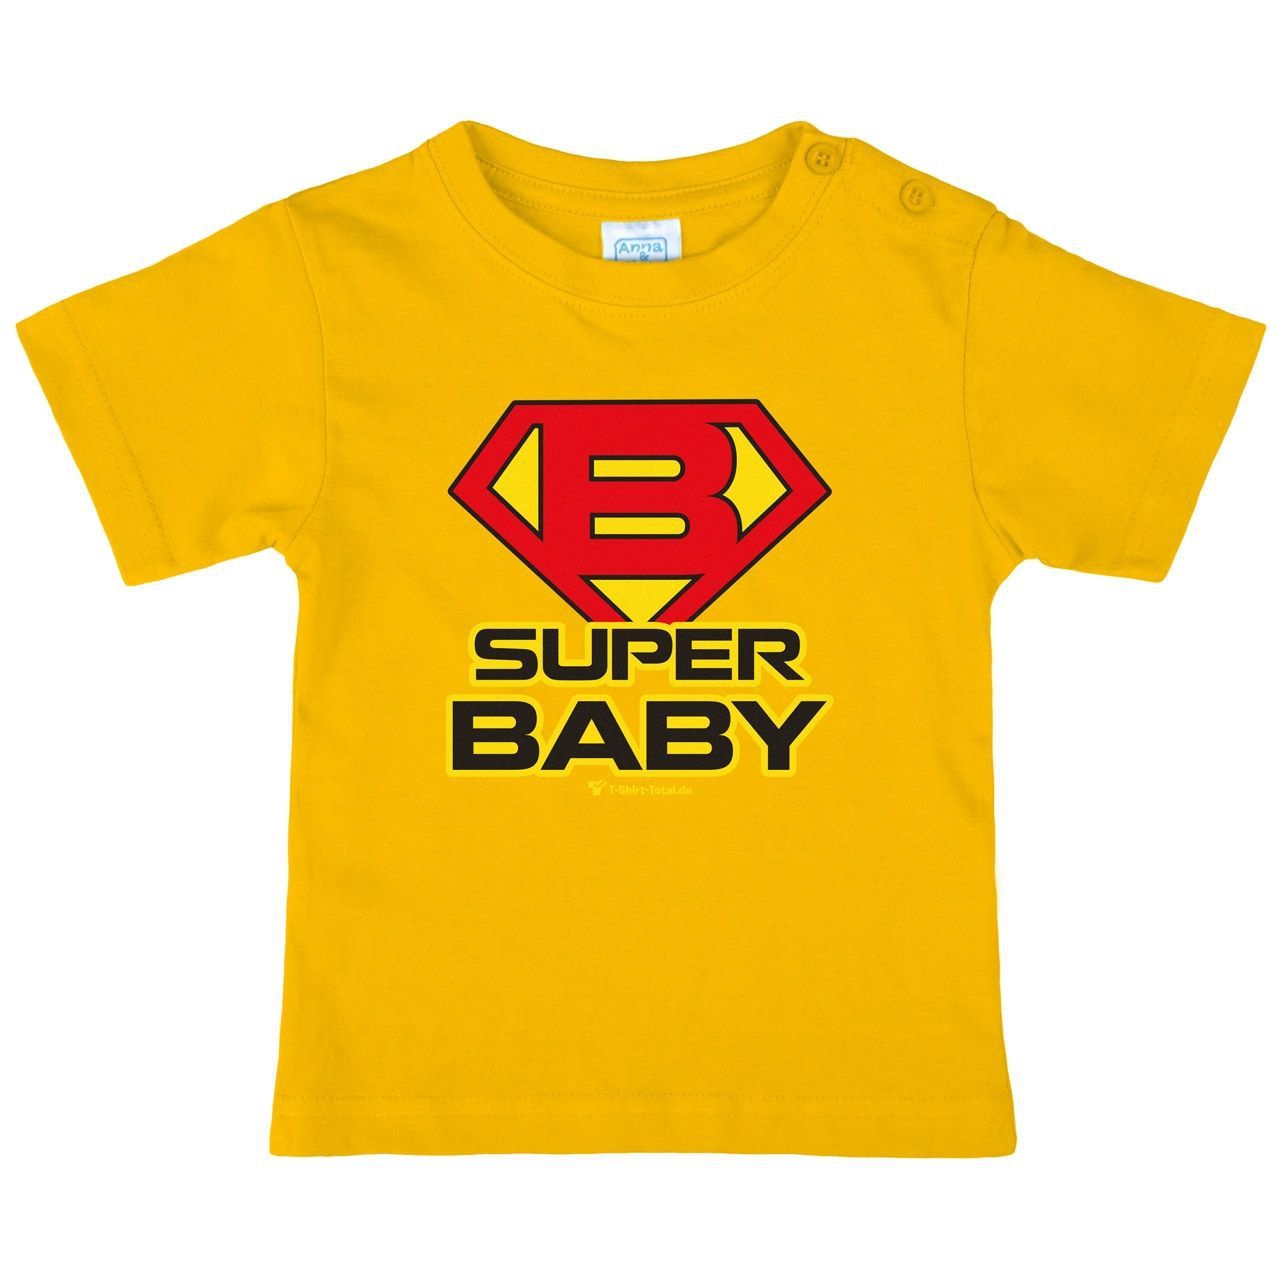 Super Baby Kinder T-Shirt gelb 92